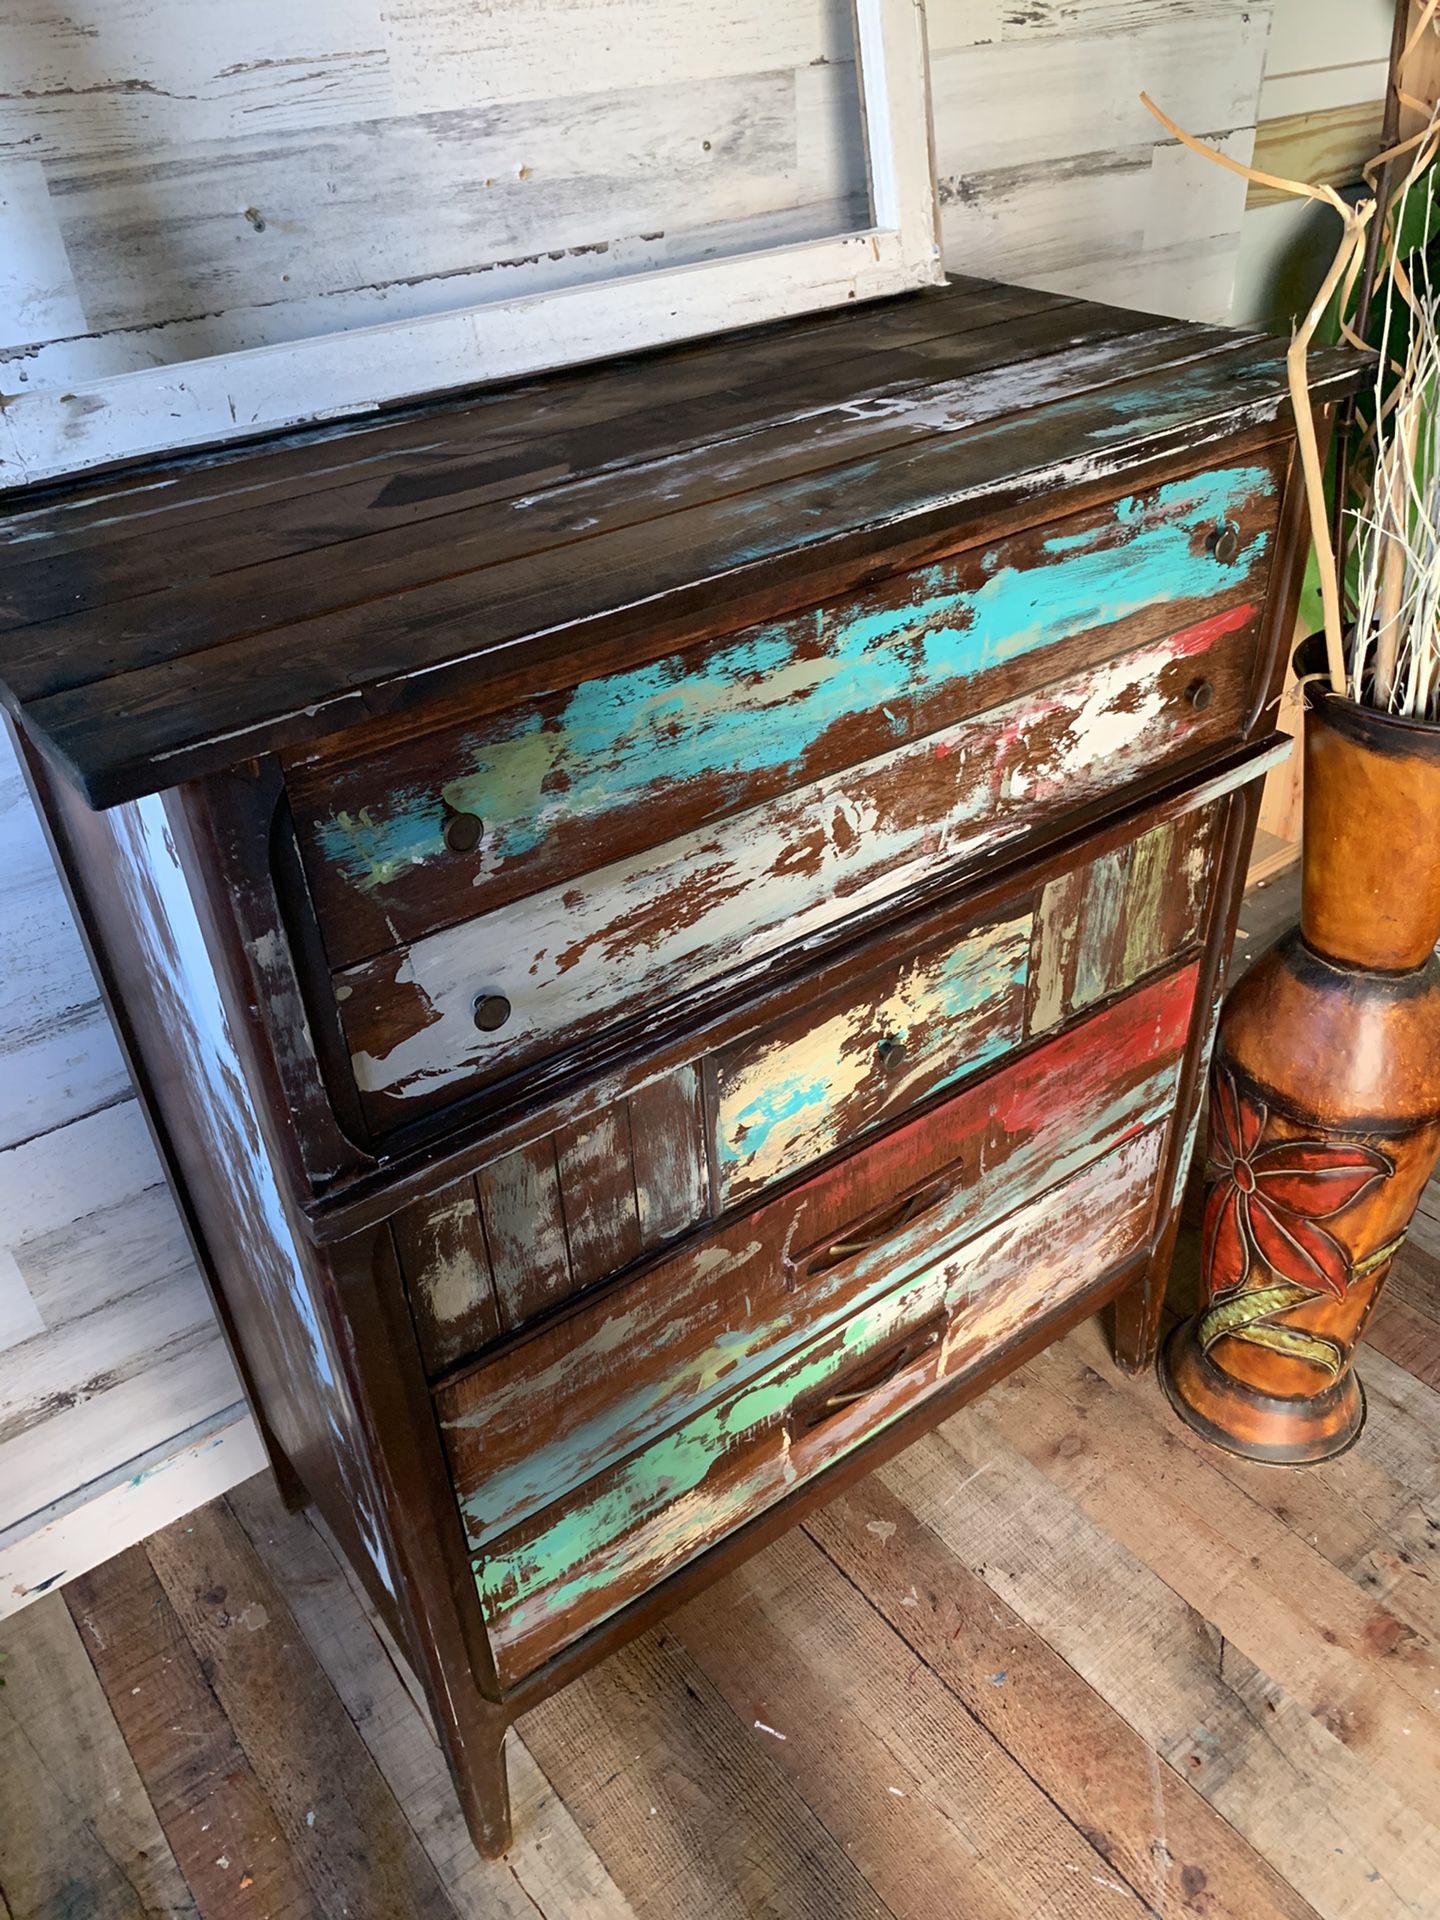 Rustic dresser